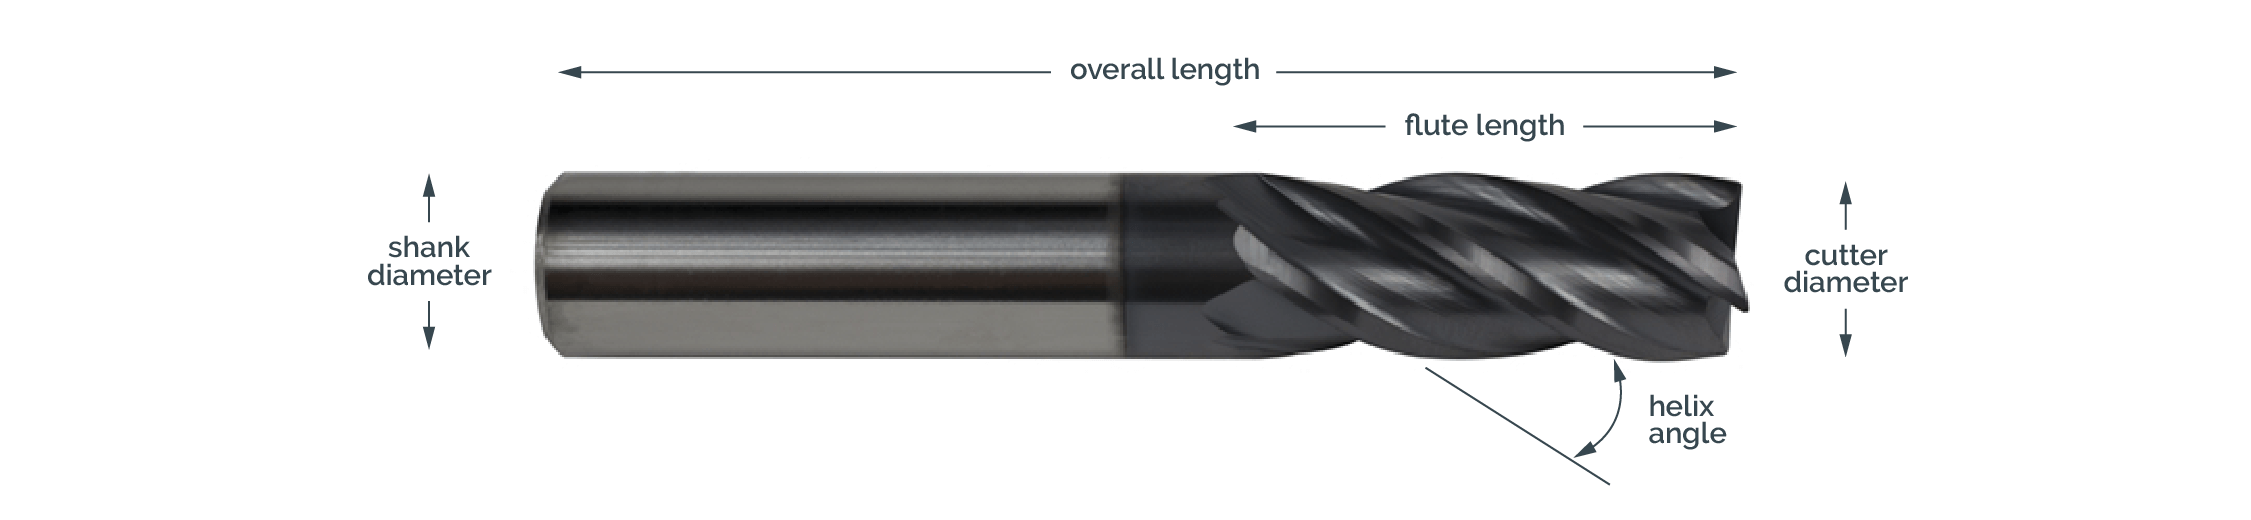 RET9013 30° Helix Angle.1200 Length Below Shank 1.5000 OAL RedLine Tools AlTiN Coated .0470 Flute Length .0156 Single End Ball Carbide End Mill 4 Flute